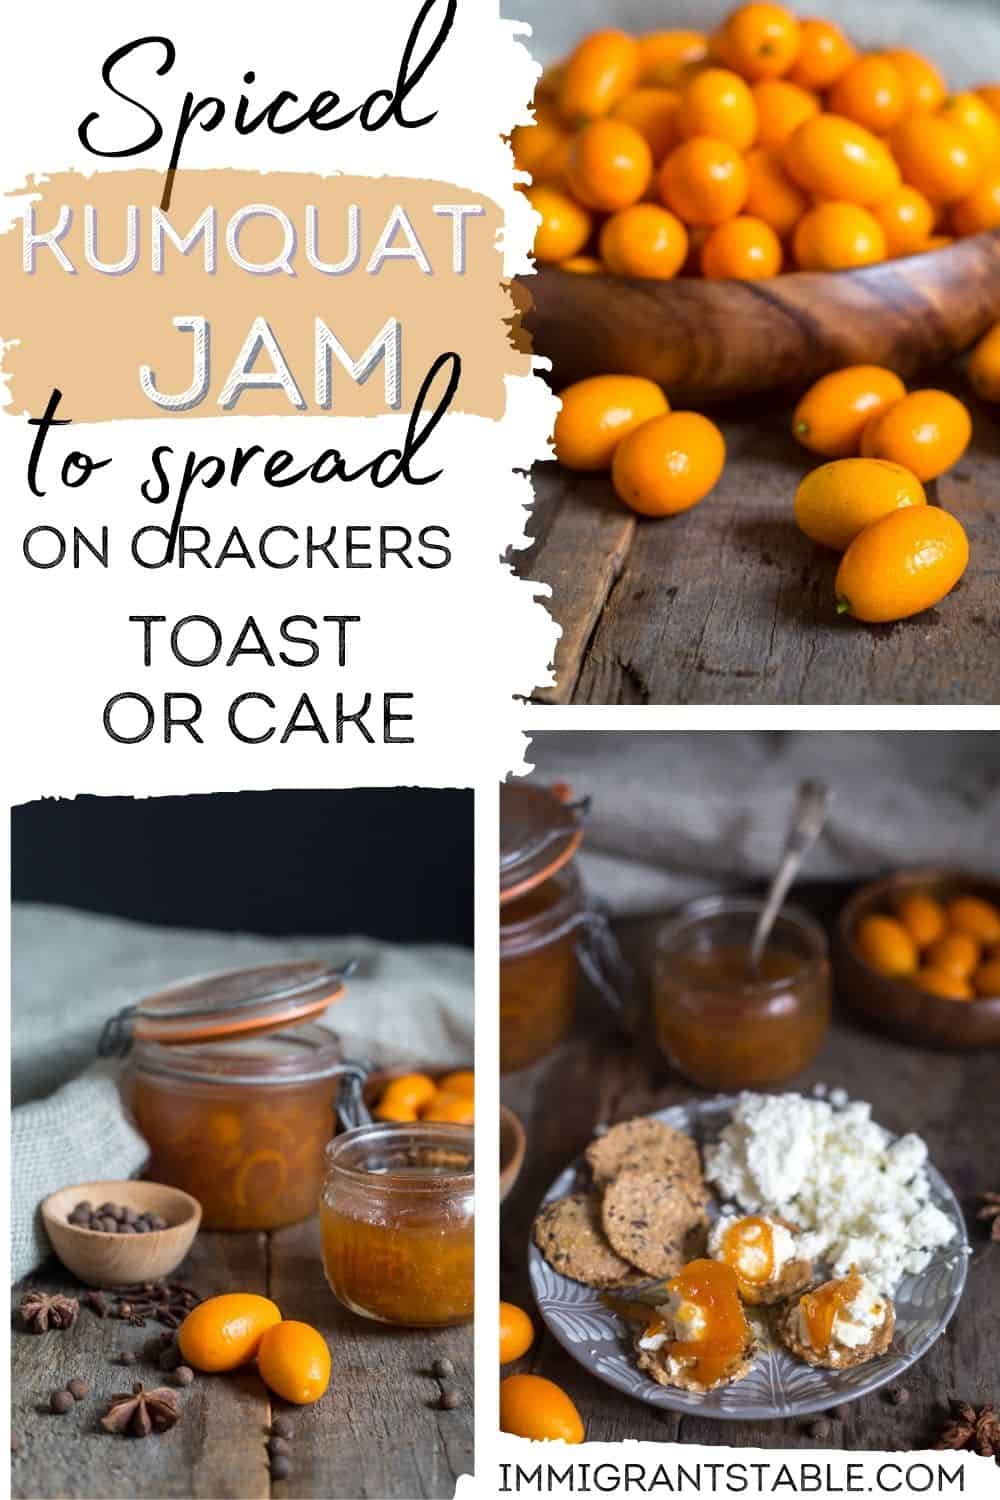 Spiced kumquat jam to spread on crackers toast and cake